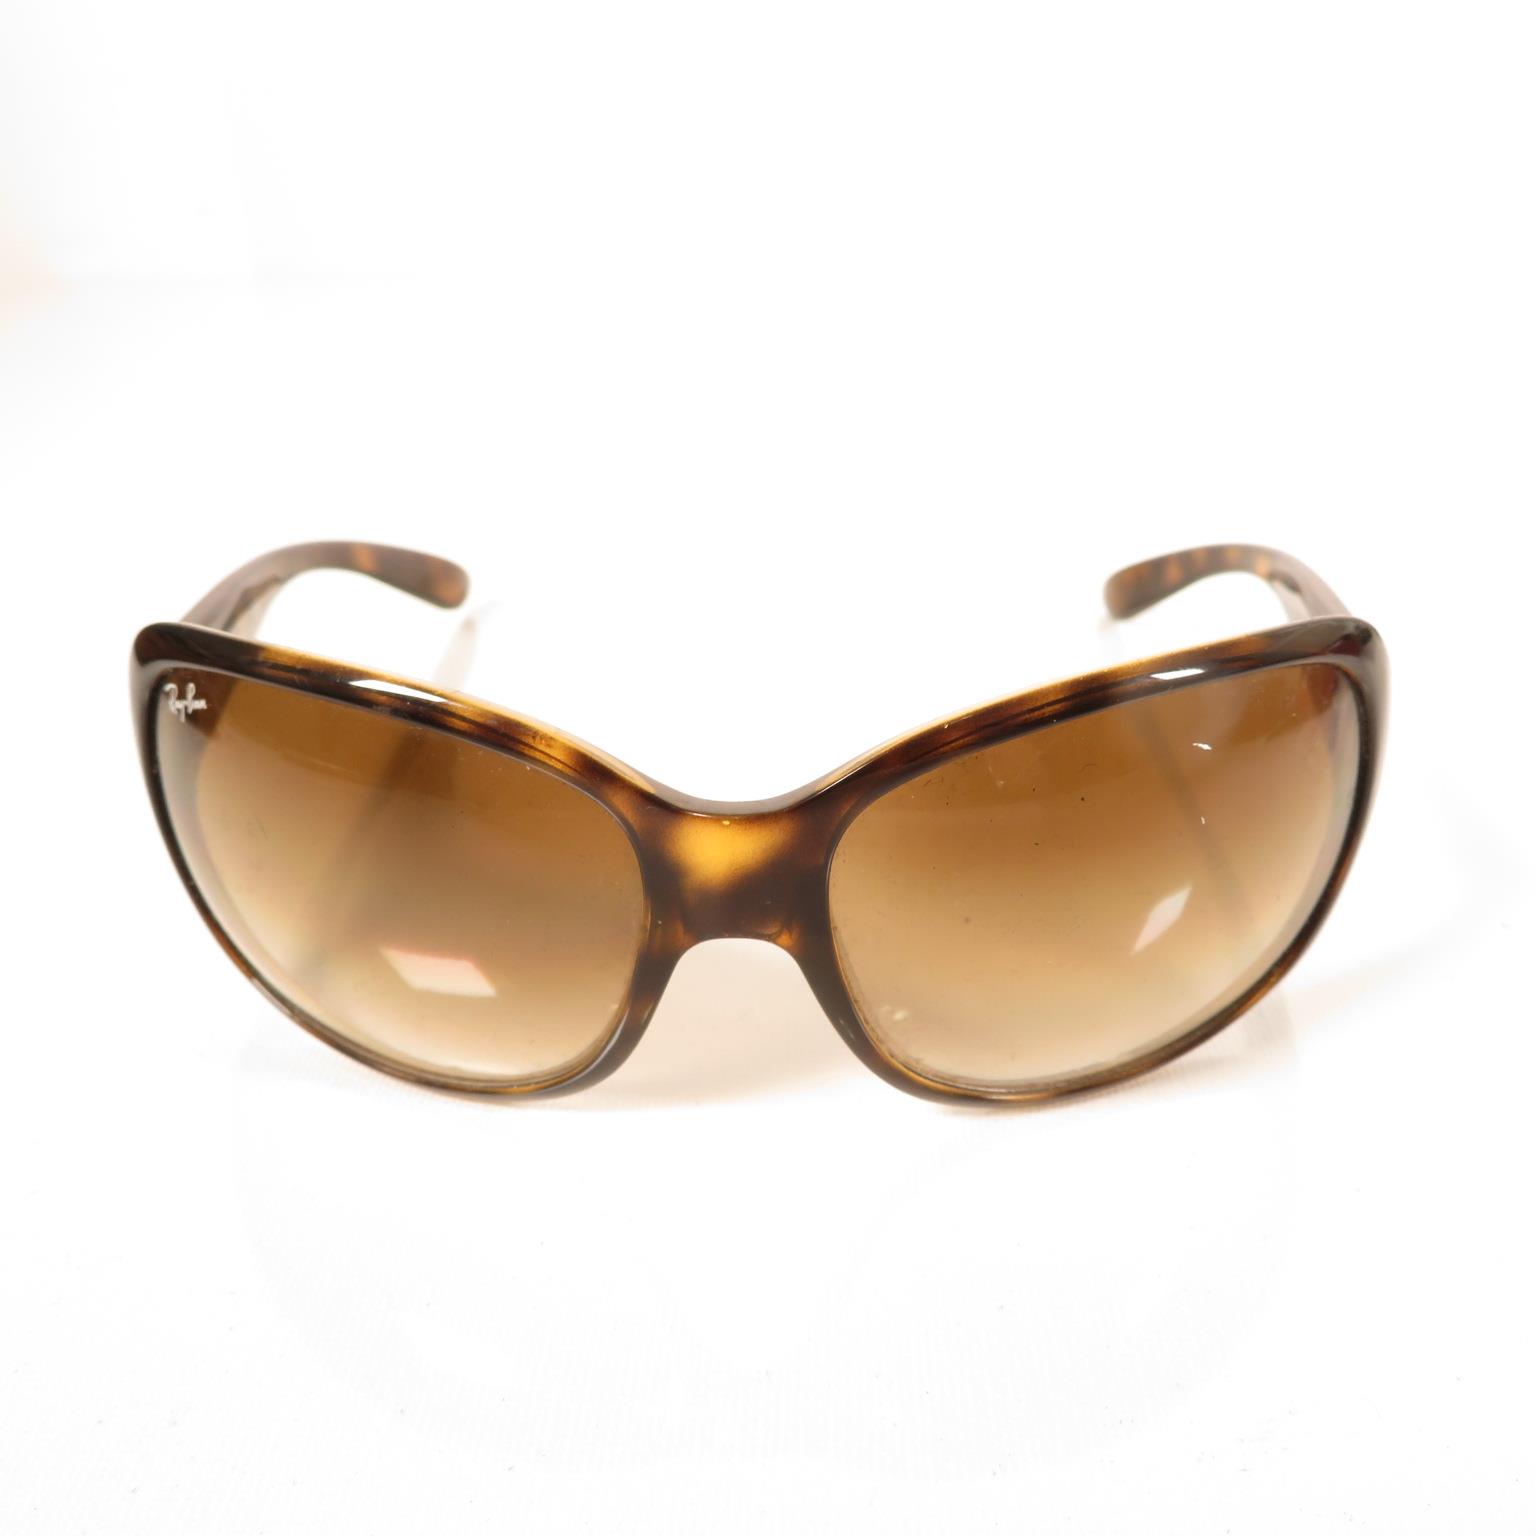 6x pairs Ray Ban sunglasses - - Image 8 of 31